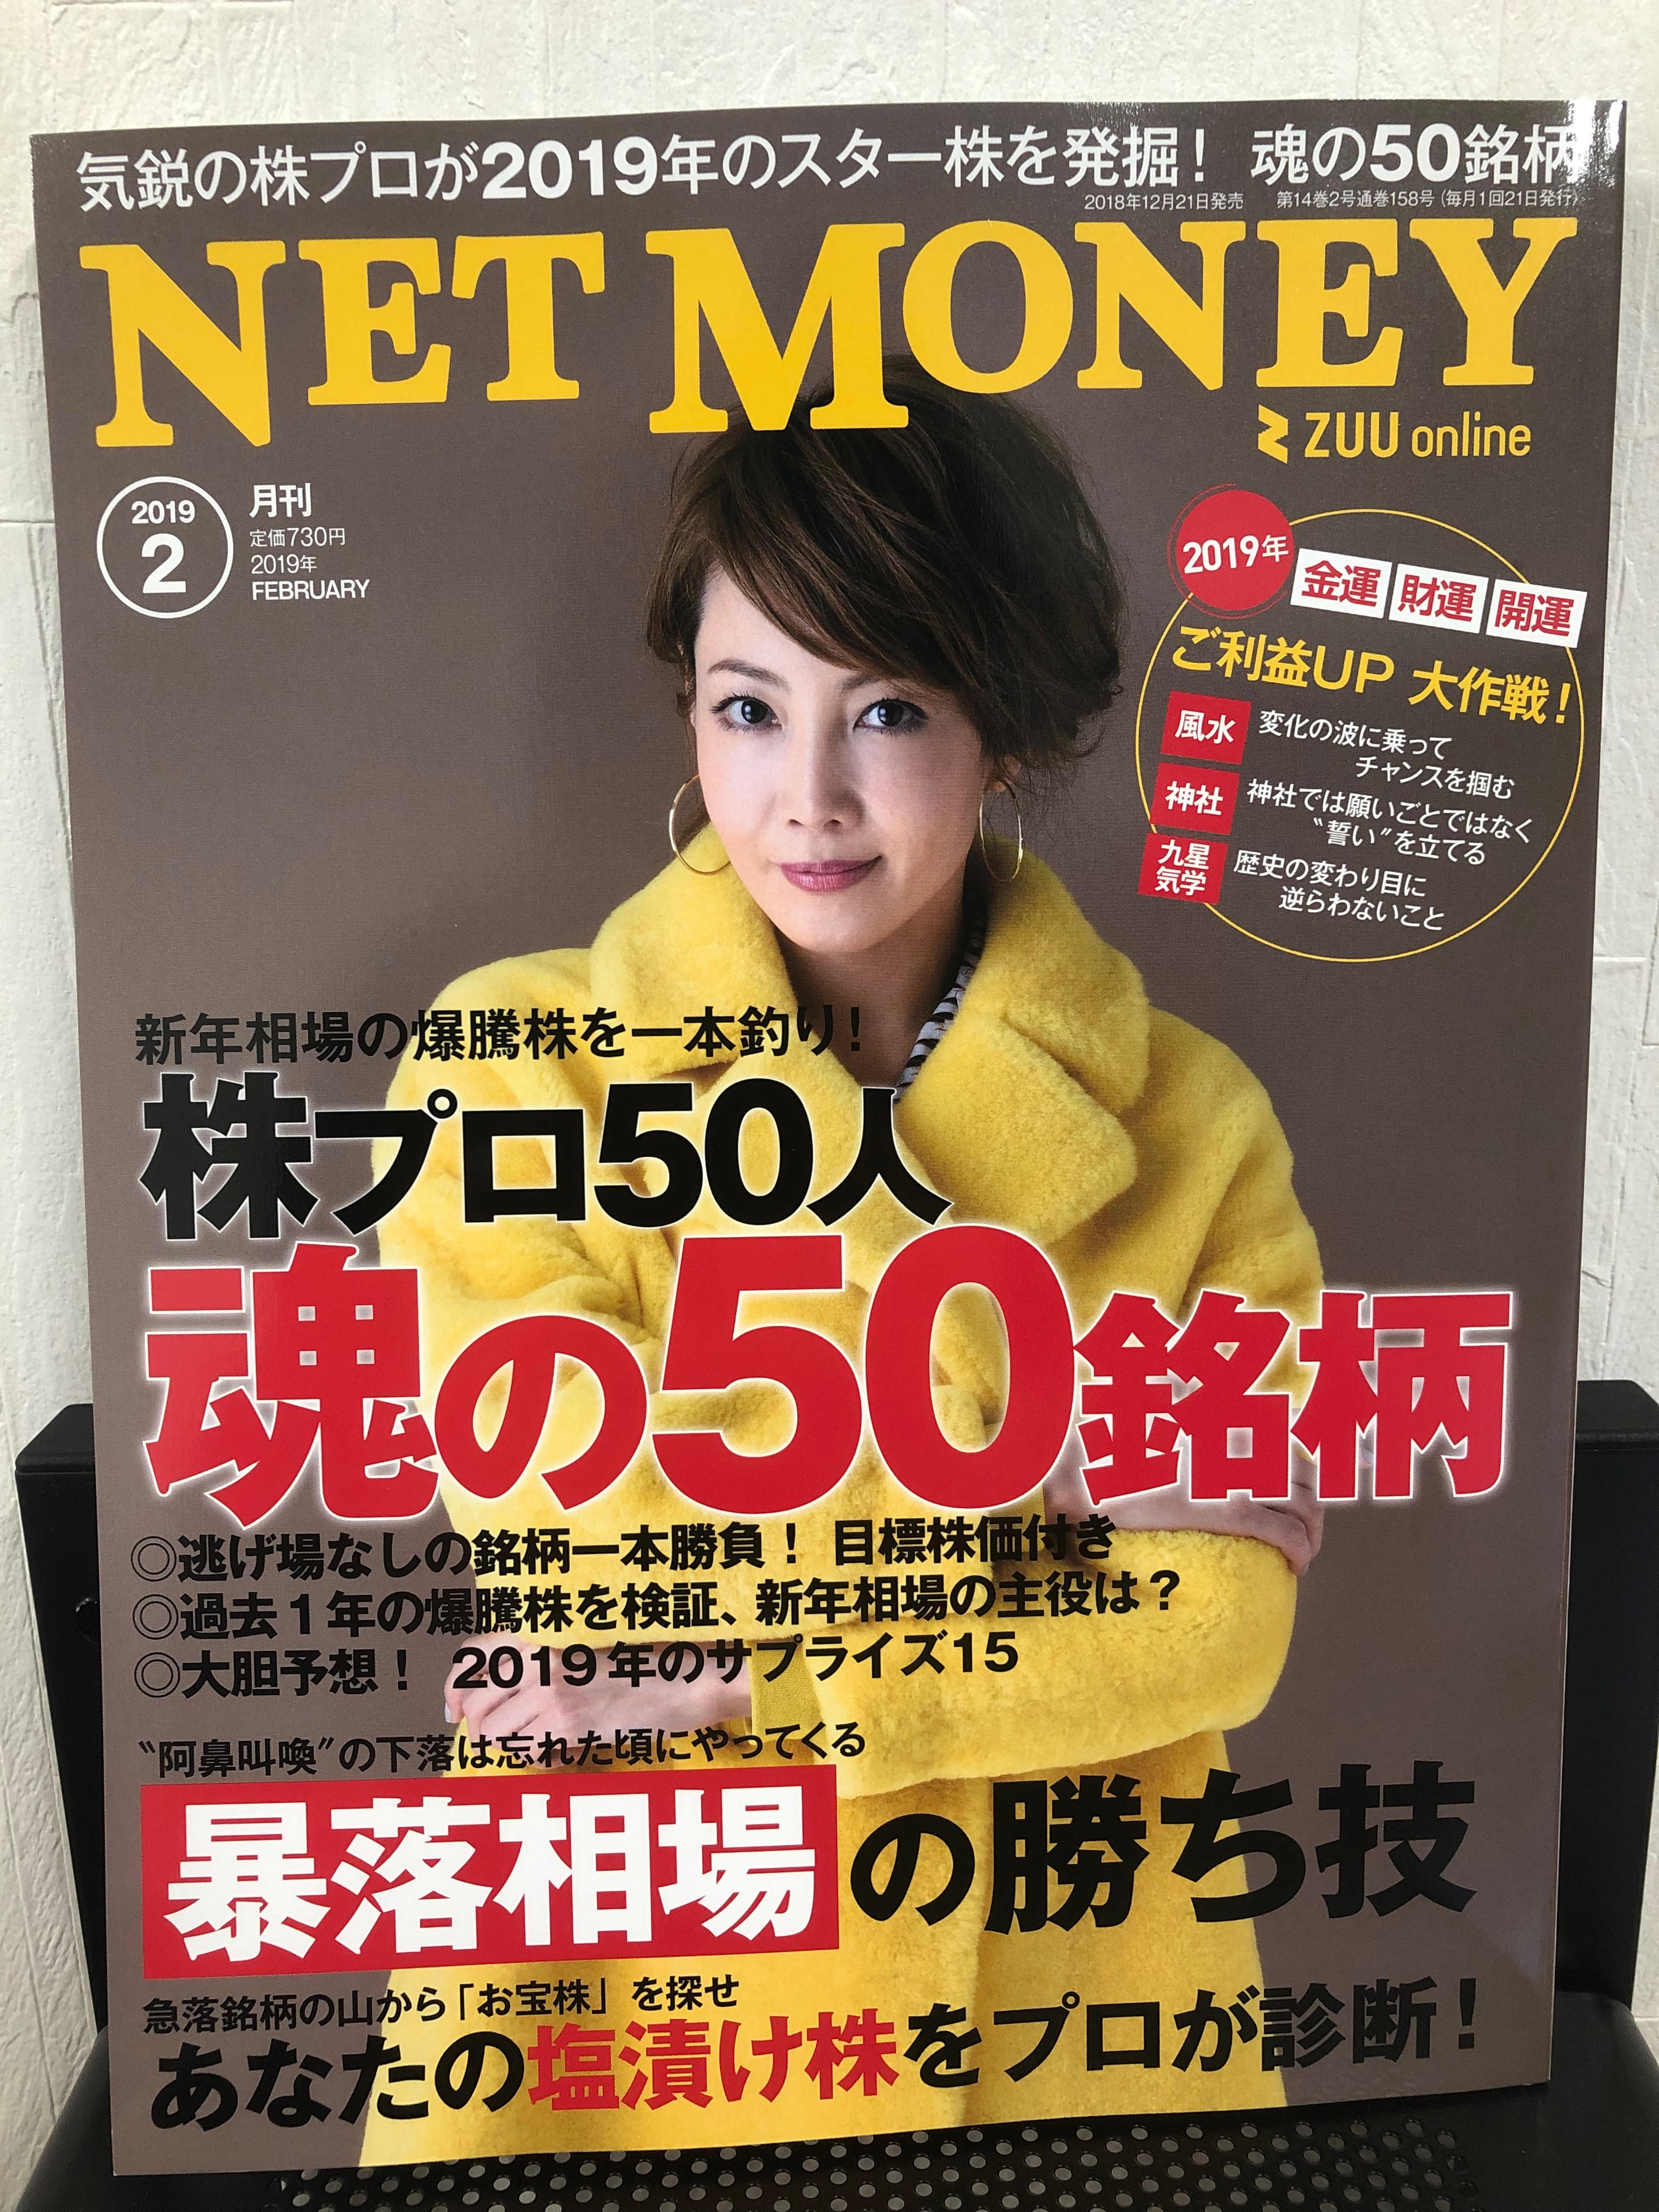 NET MONEY.jpg